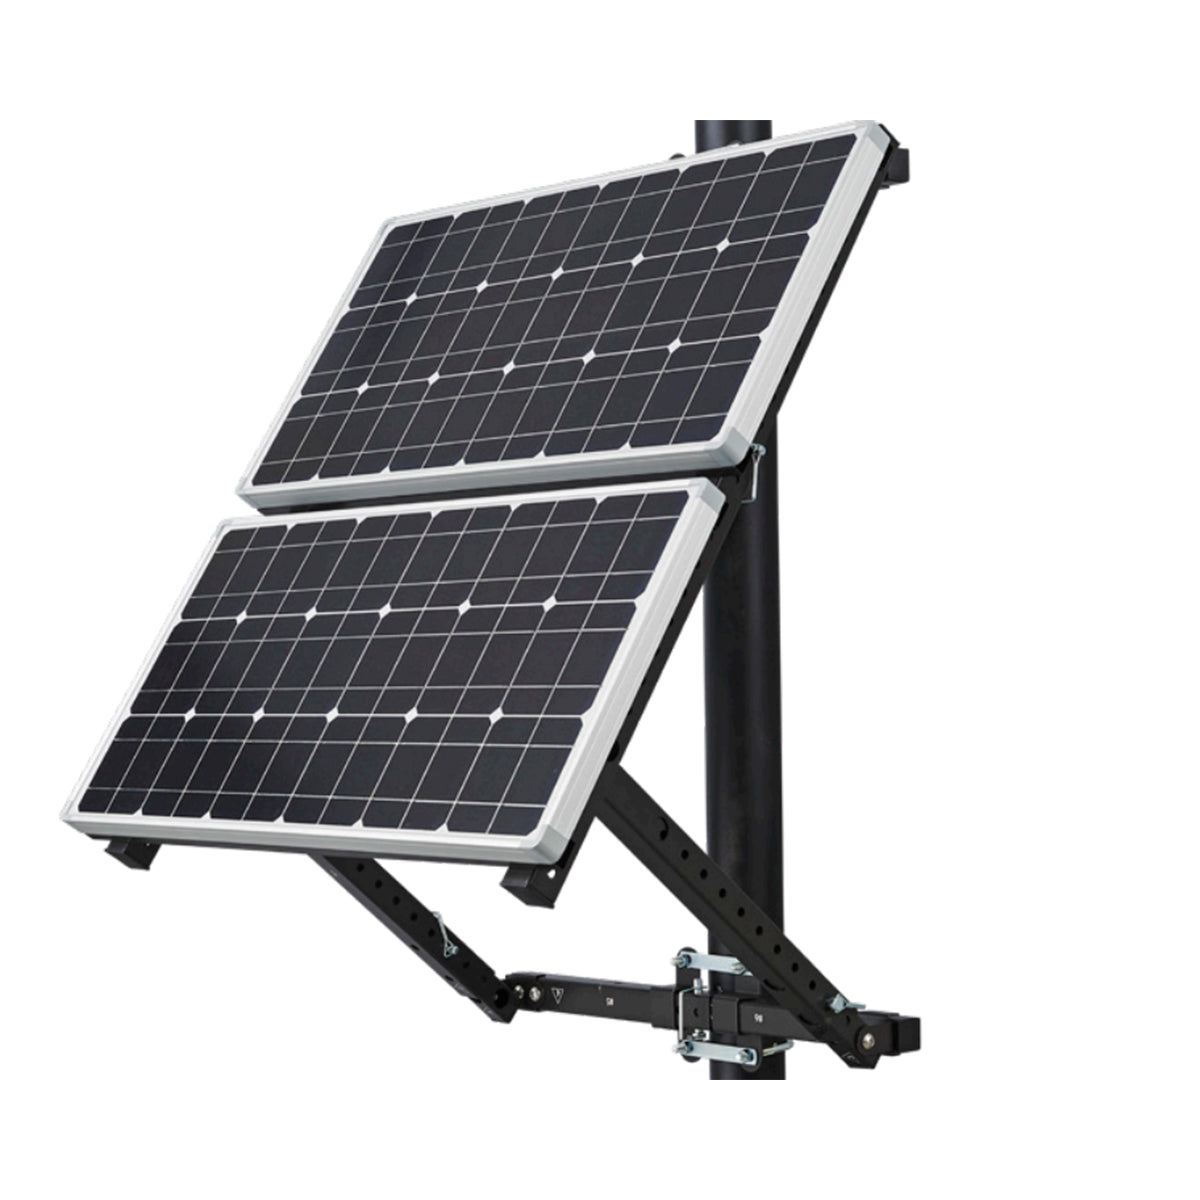 2 Solar Panel Kit For 50W Area Lights